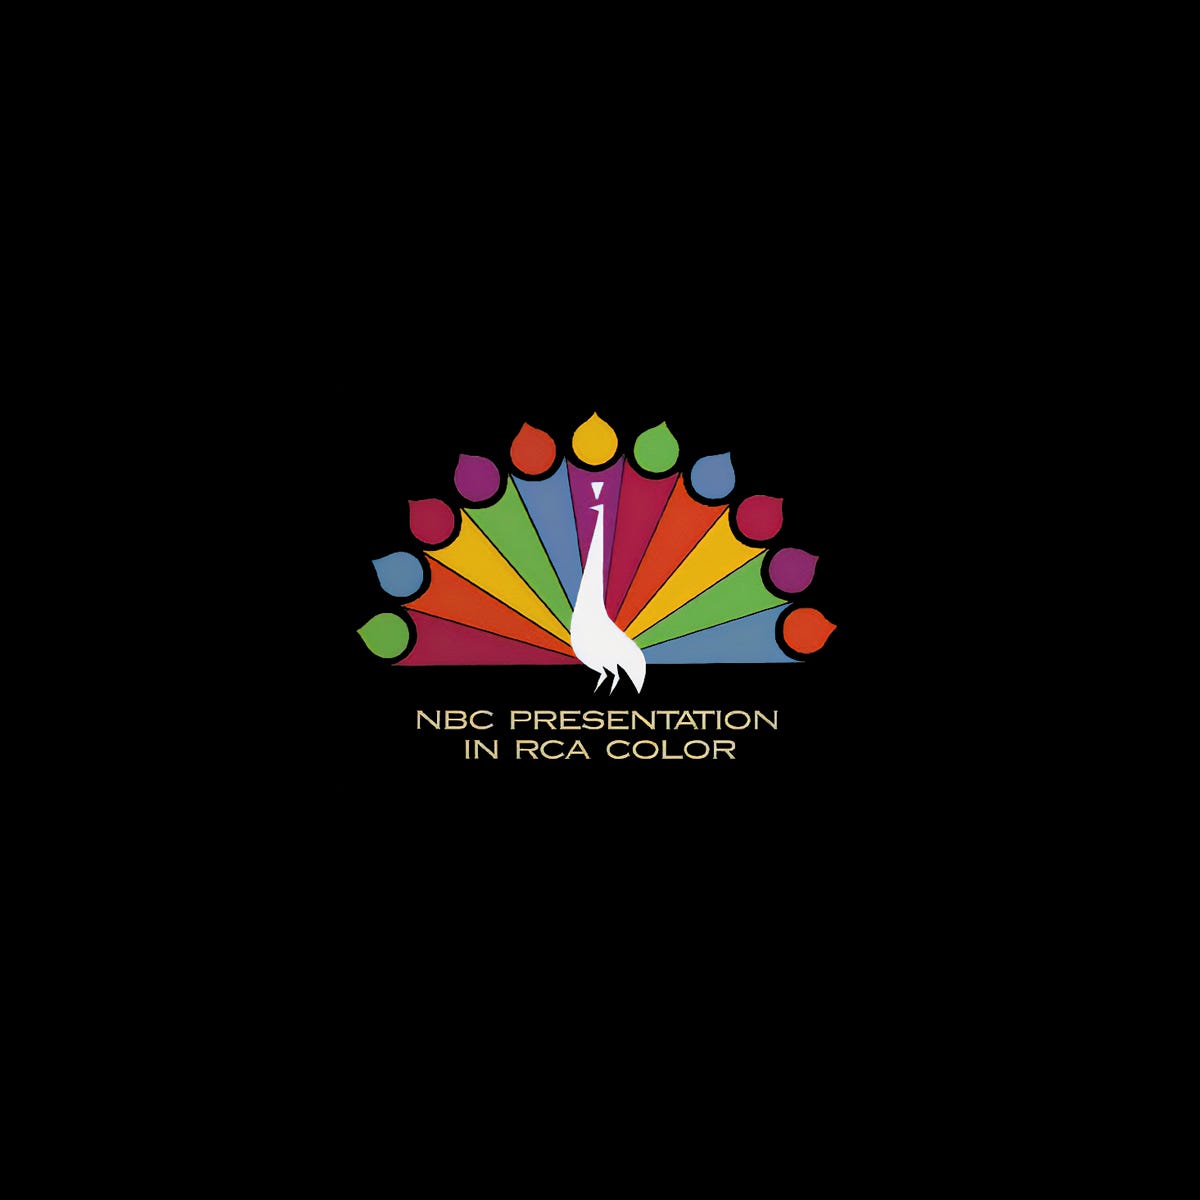 NBC 1956 logo by Herb Lubalin